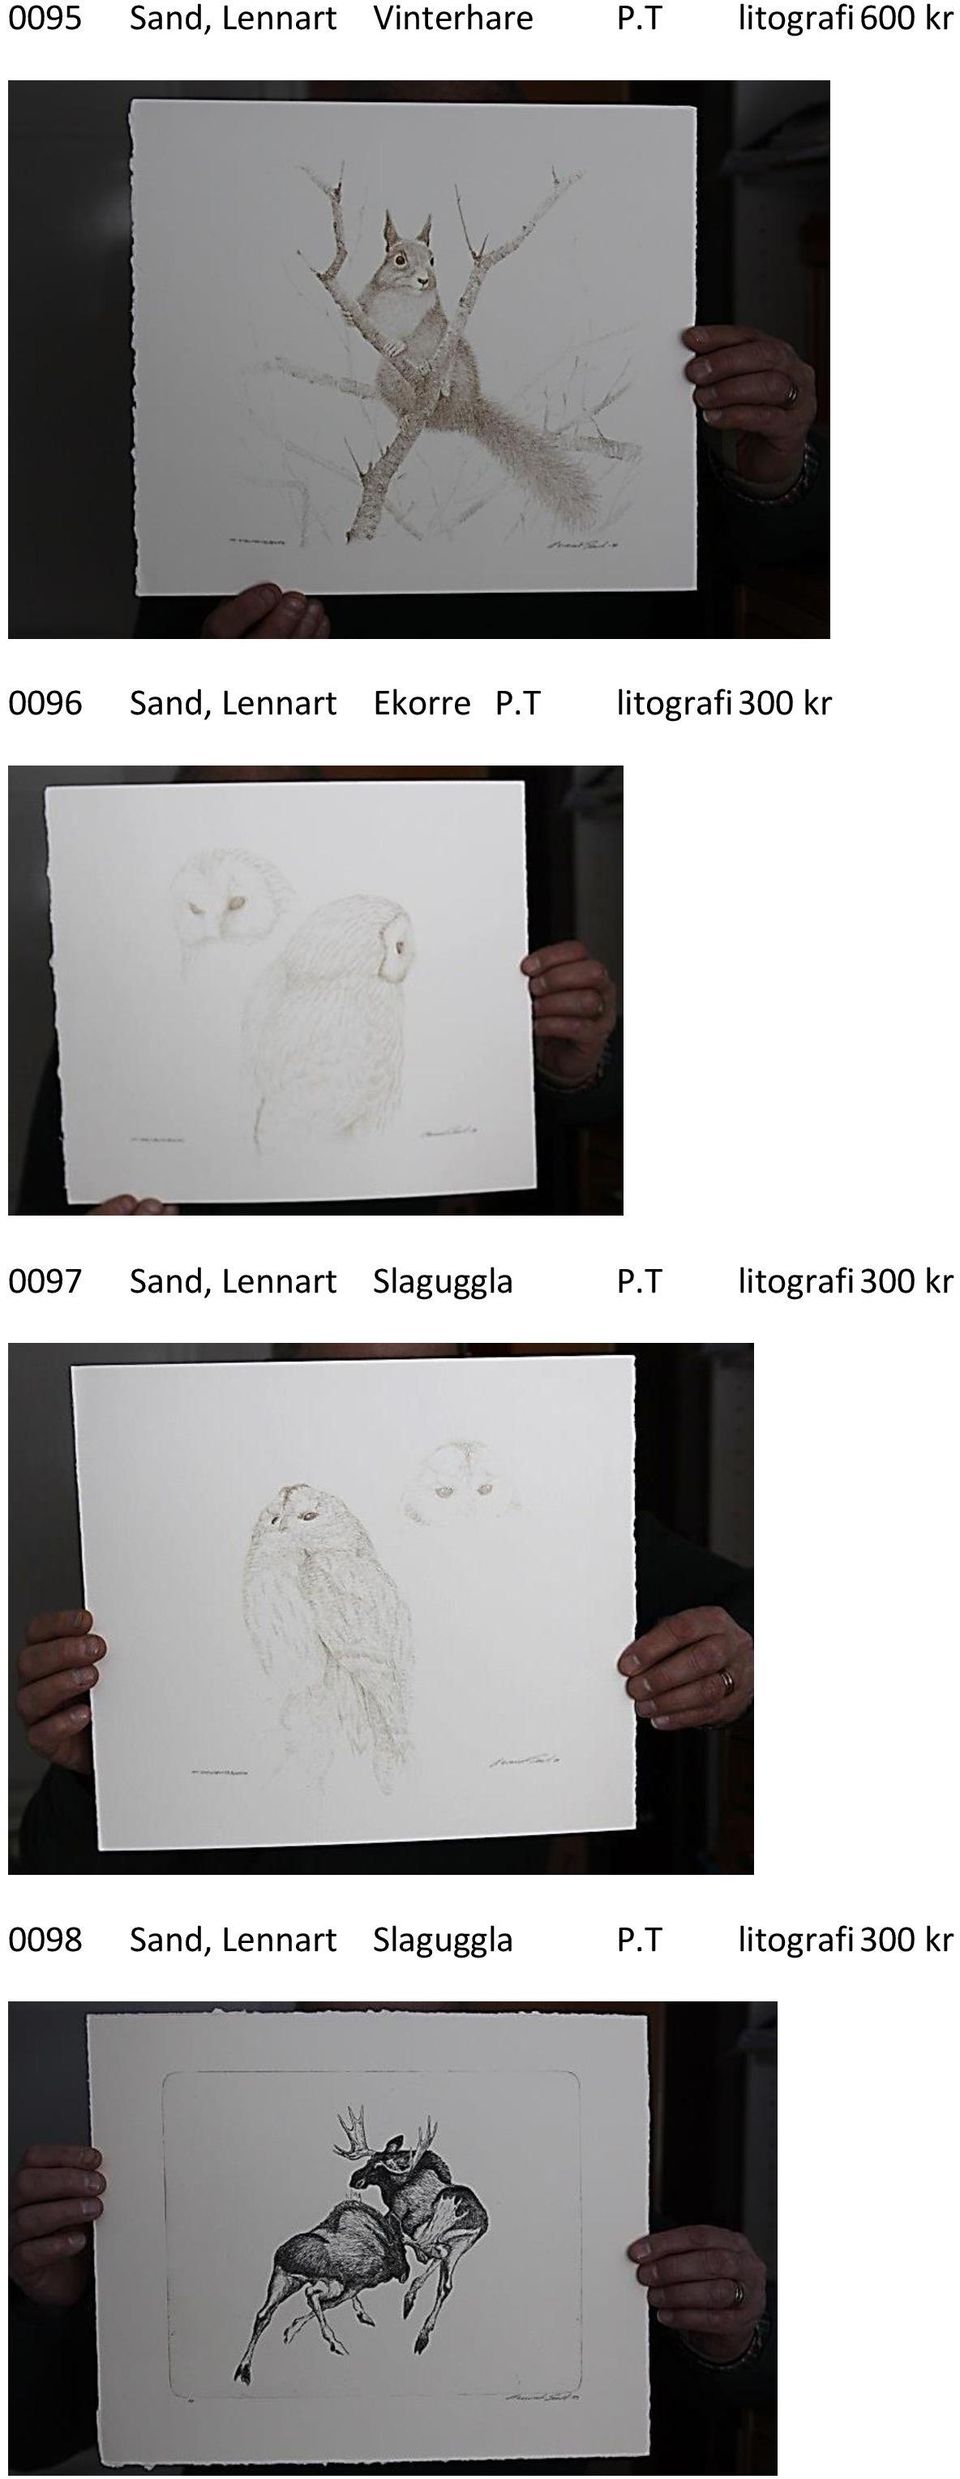 T litografi 300 kr 0097 Sand, Lennart Slaguggla P.